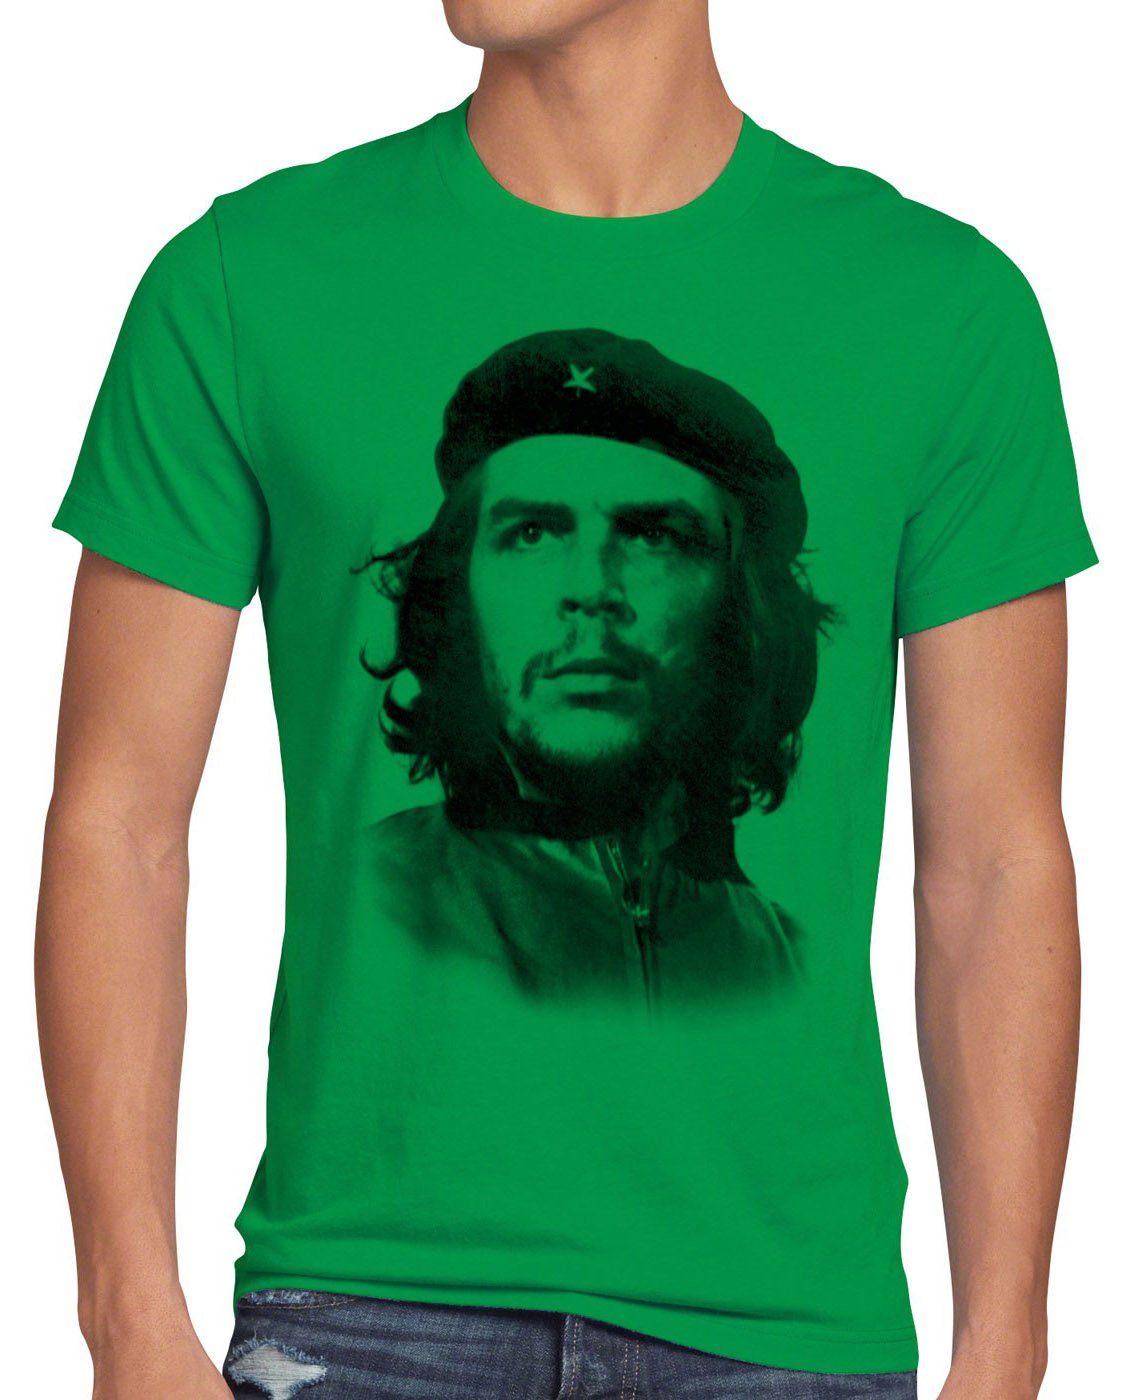 castro kuba Print-Shirt T-Shirt Kommunismus Guevara revolution Herren style3 Havana Foto CHE grün cuba